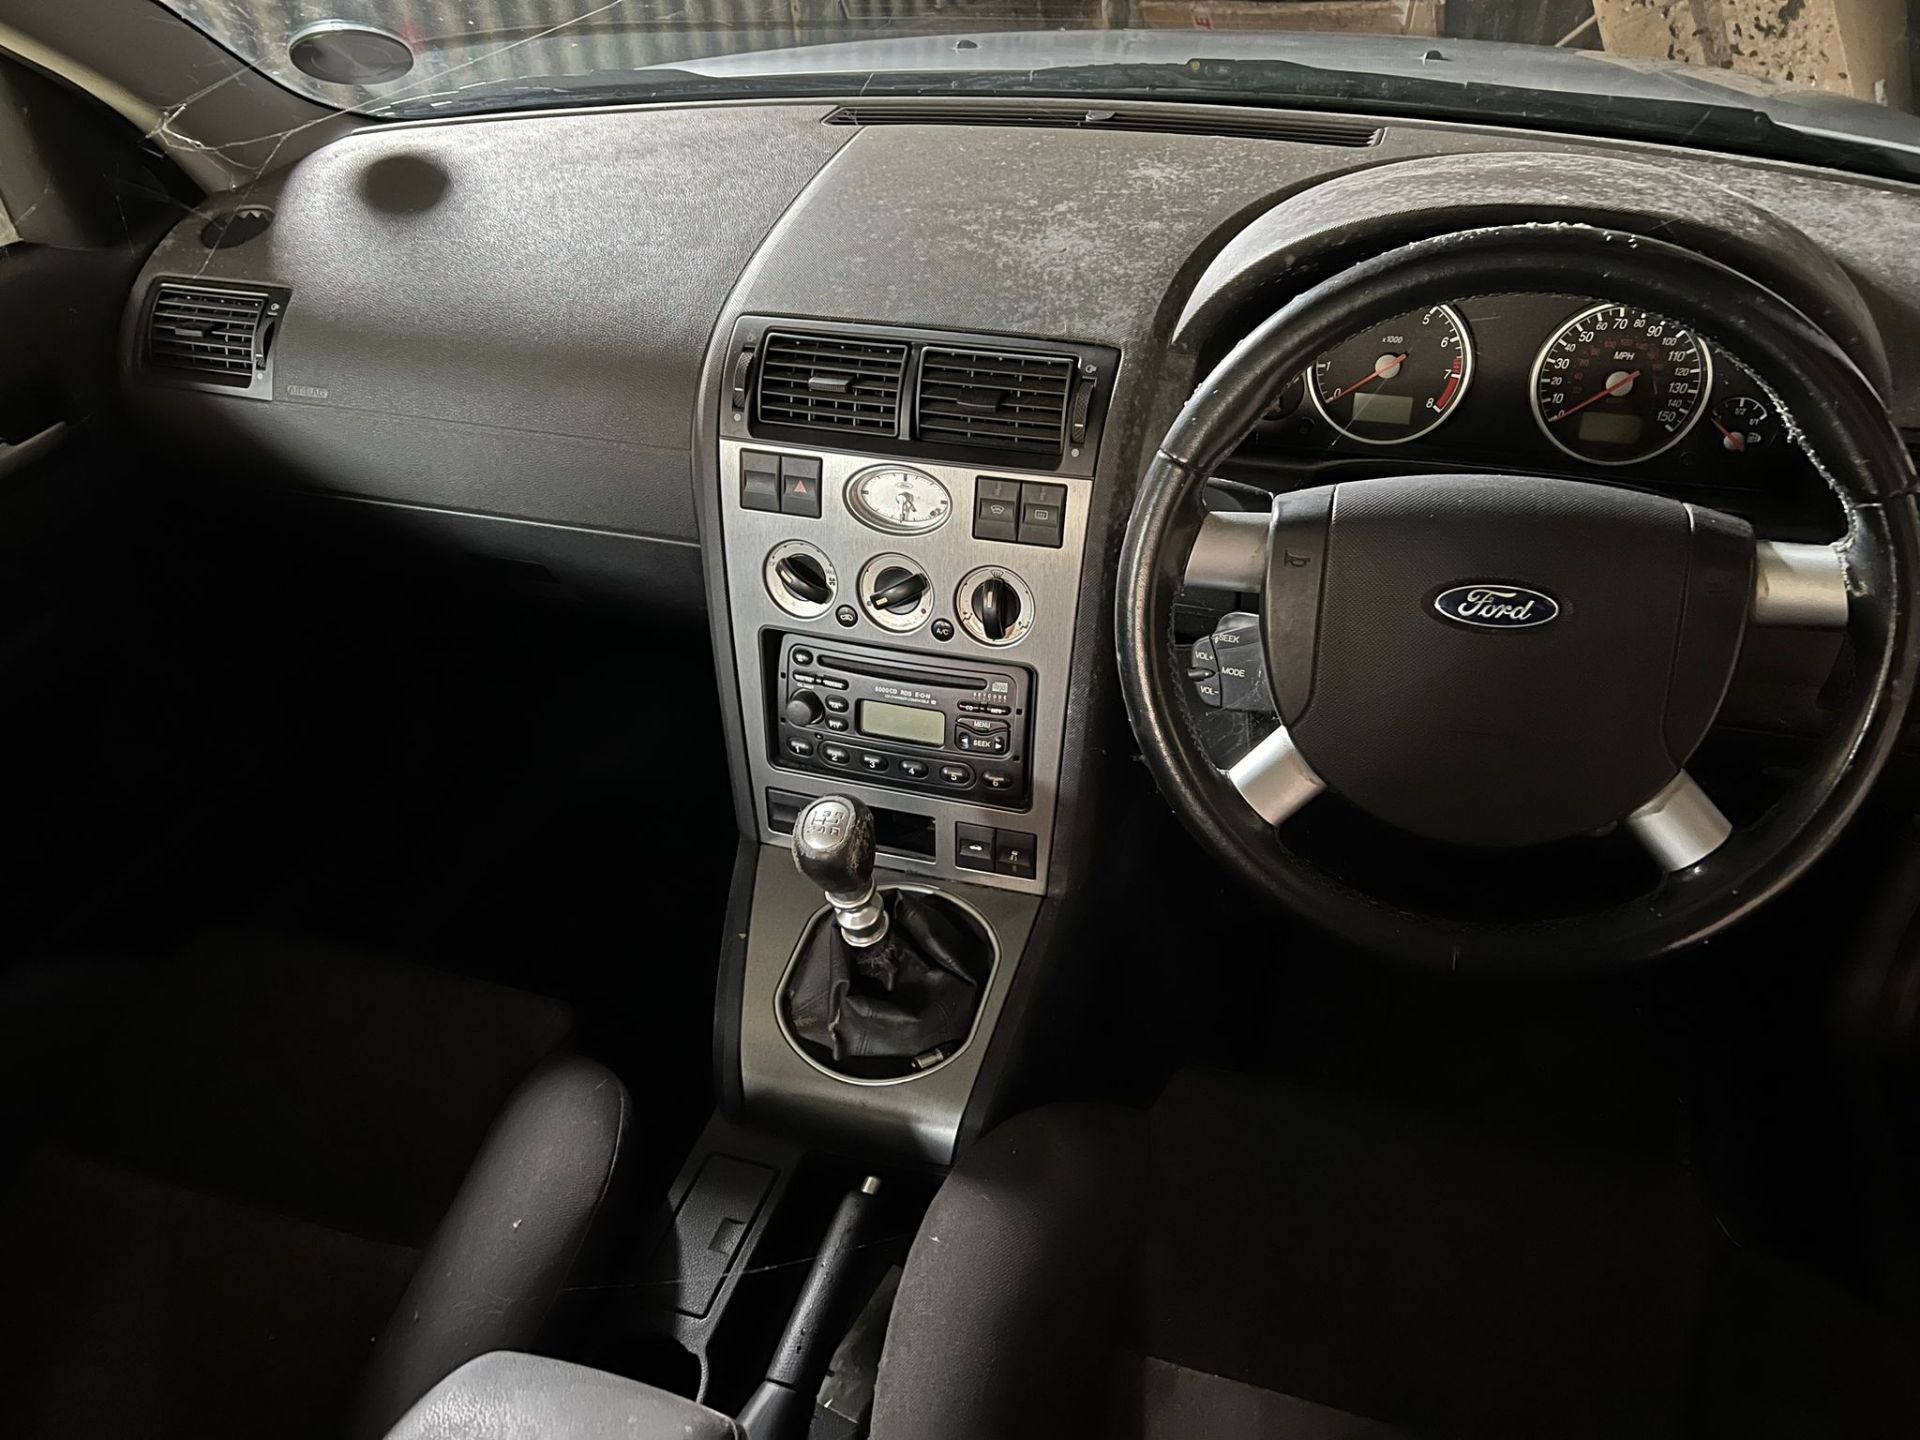 Ford Mondeo Zetec-S 2.5 V6 2002 - Barn Find - Image 14 of 15